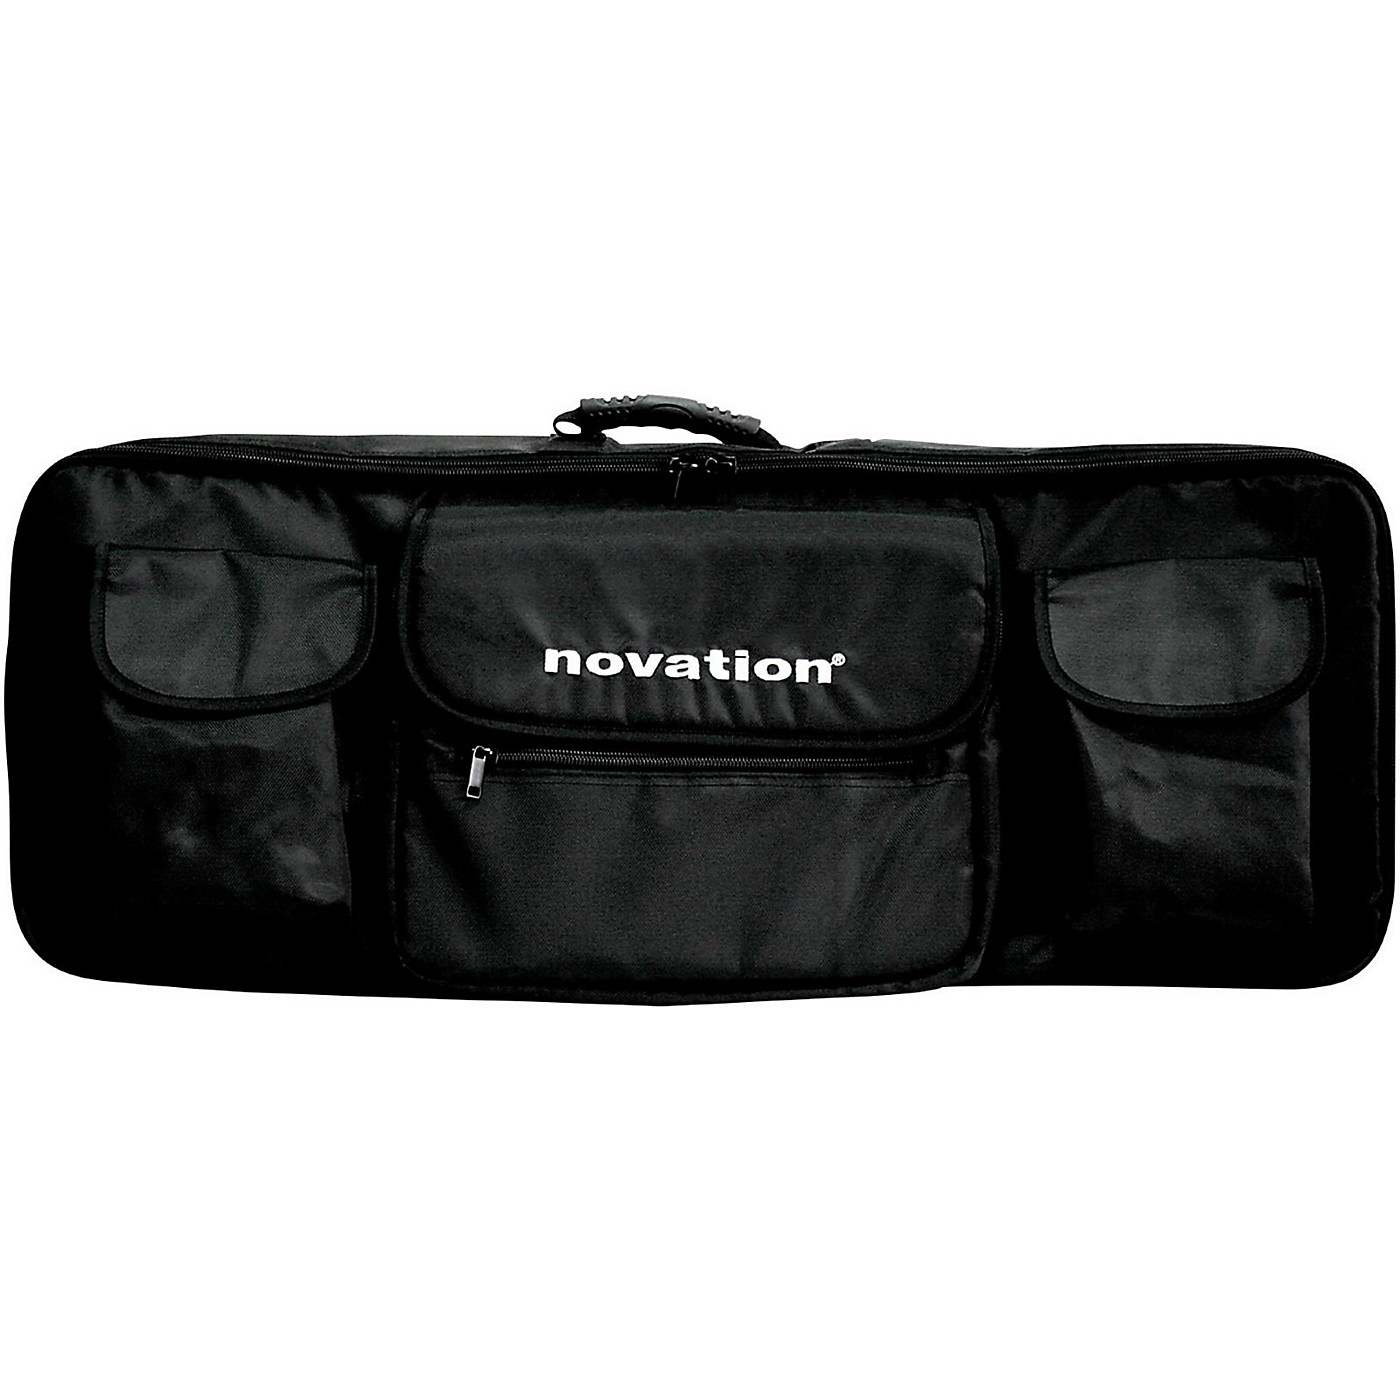 Novation Black Bag thumbnail